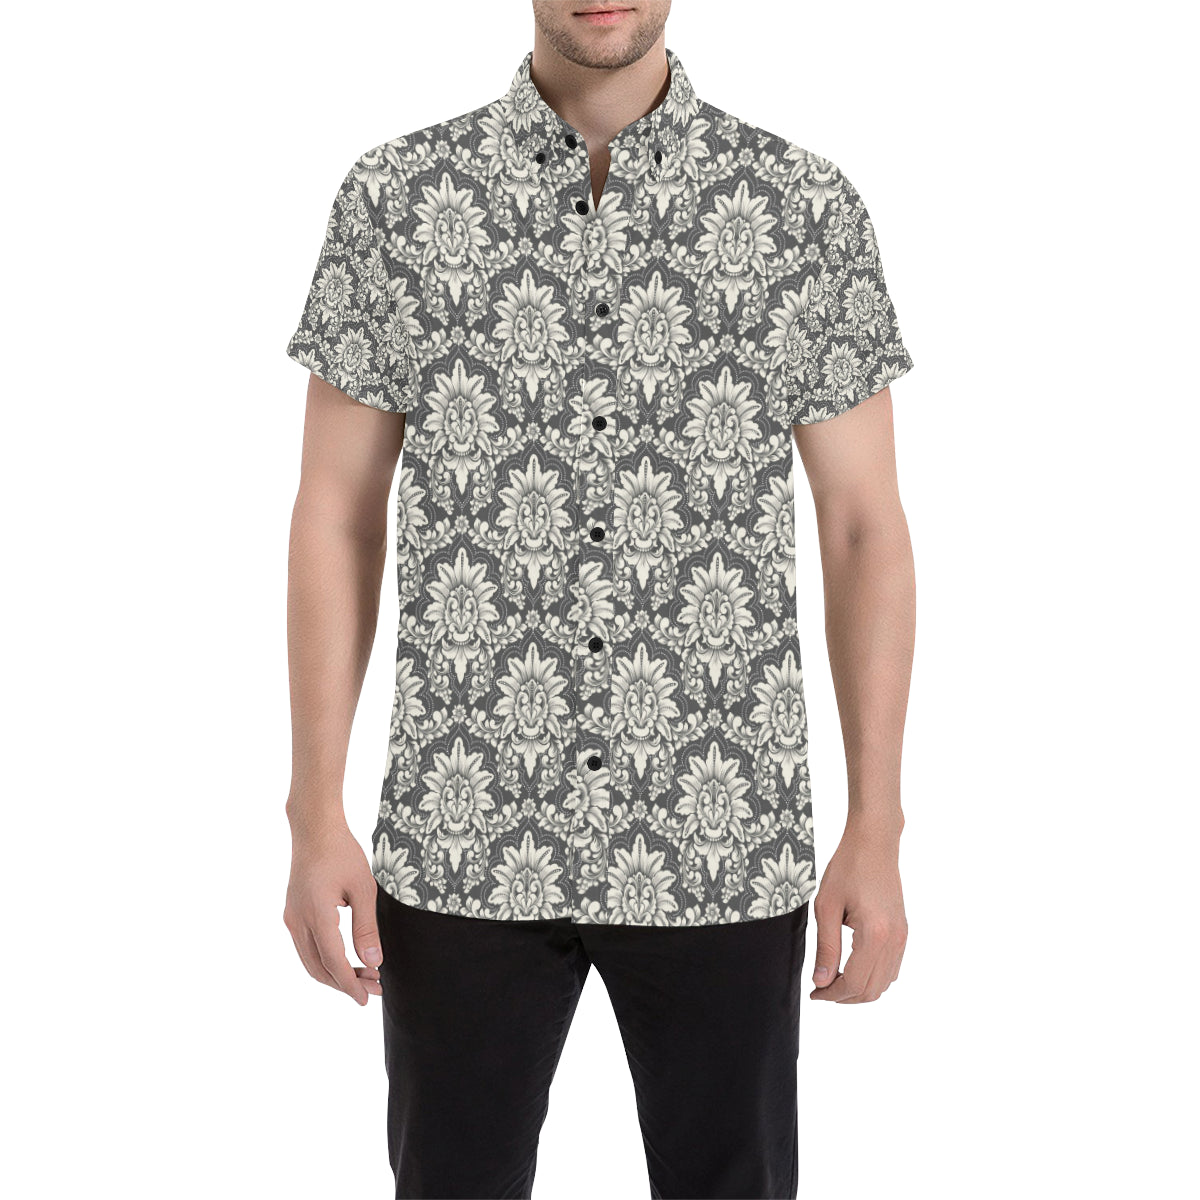 Damask Elegant Print Pattern Men's Short Sleeve Button Up Shirt